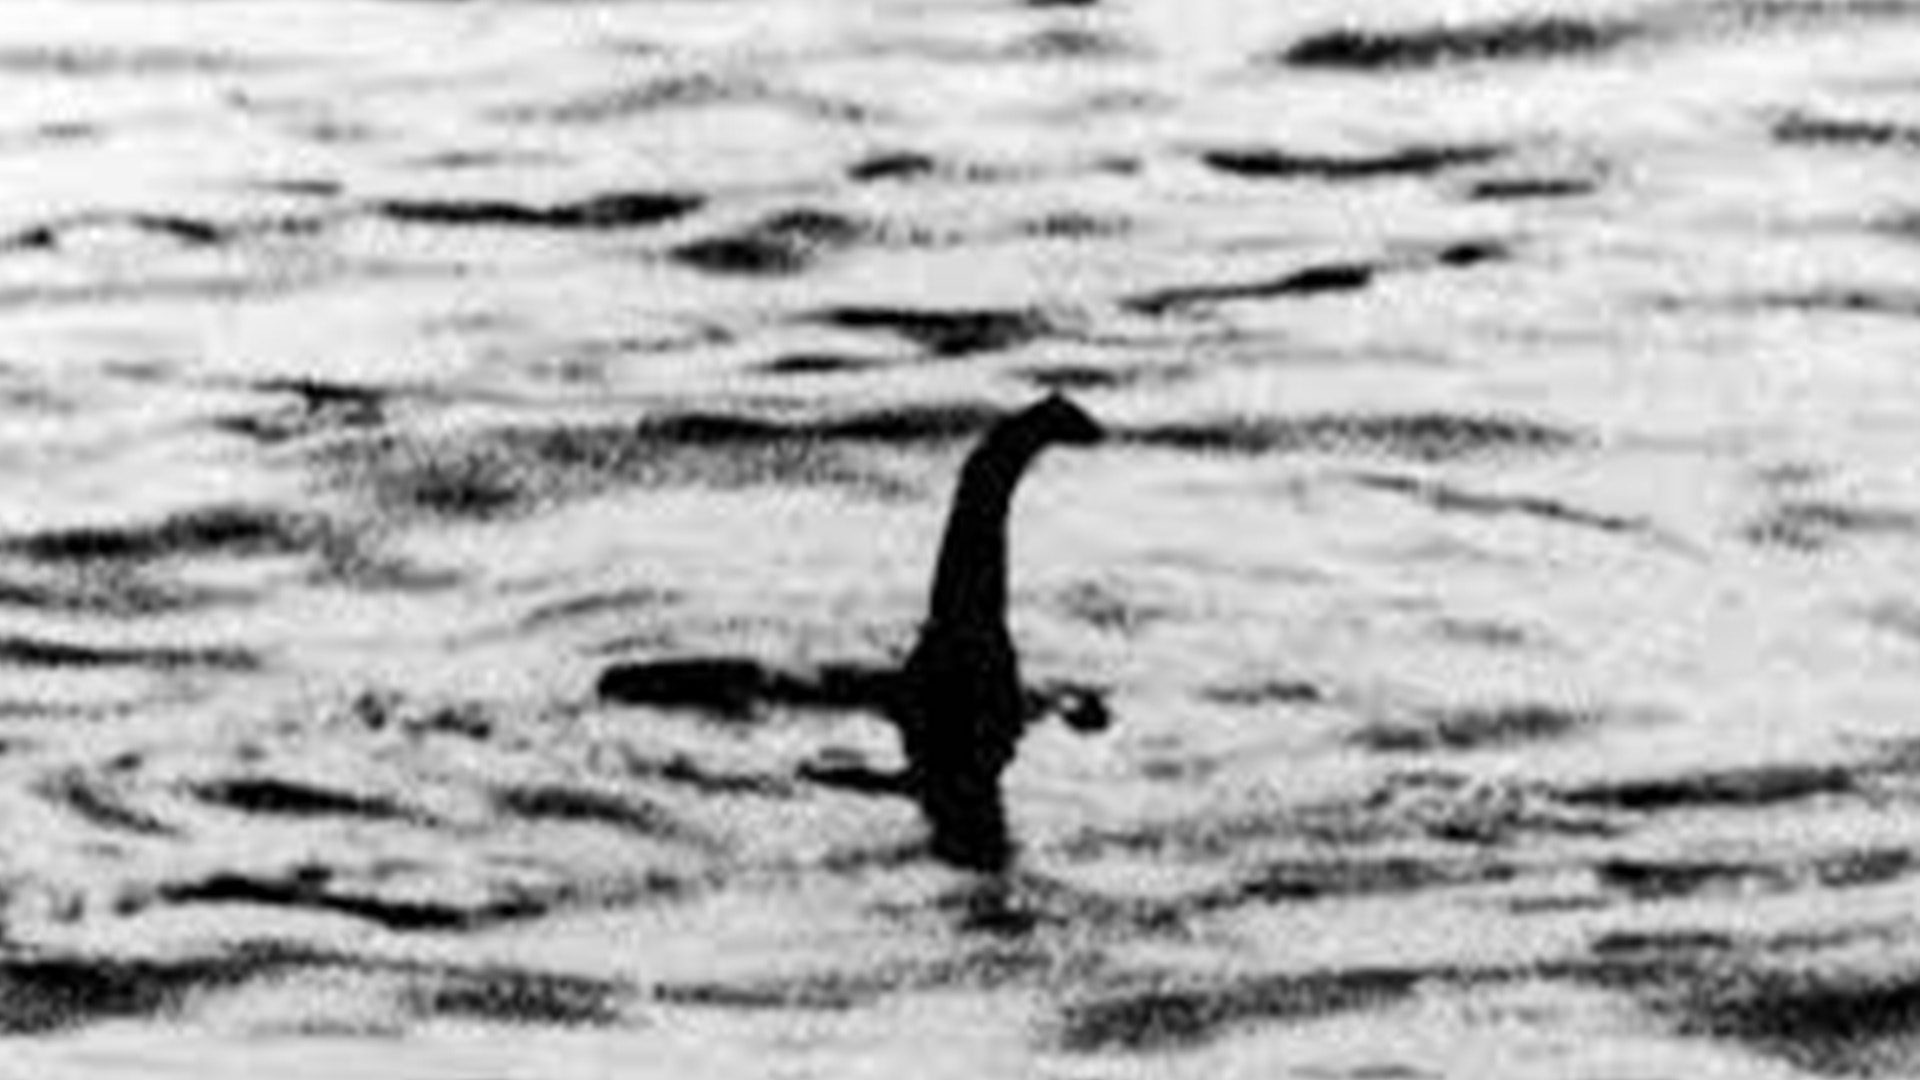 Loch Ness Monster Photo Scotland 1934 Keystone:Getty Images